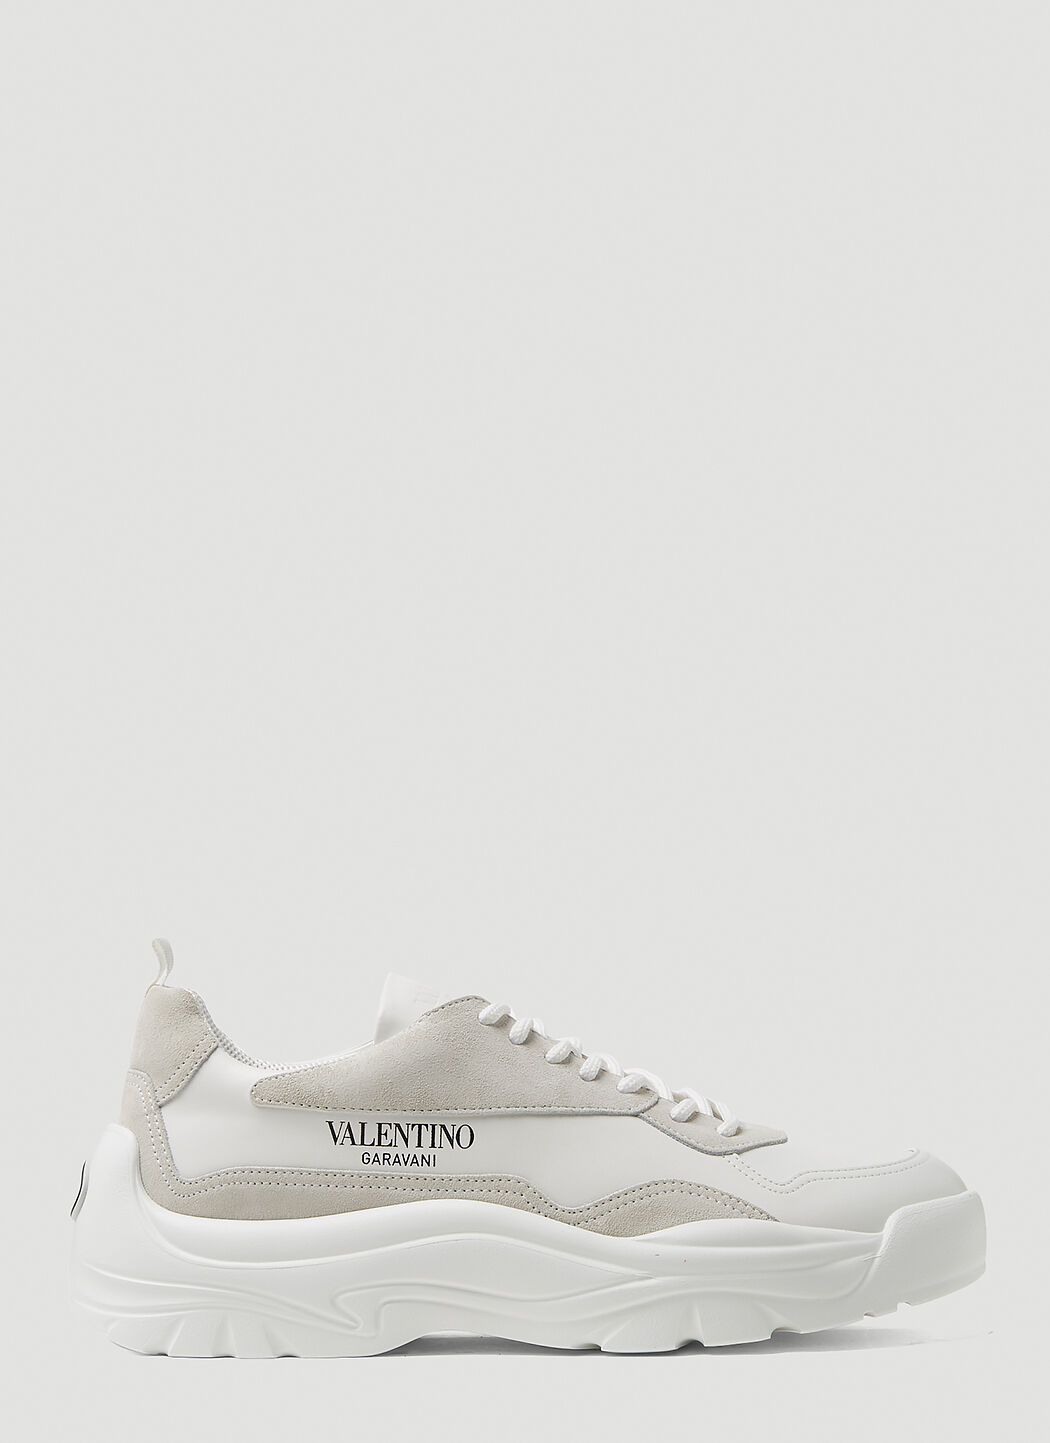 Valentino Garavani Gumboy Sneakers Grey val0143020